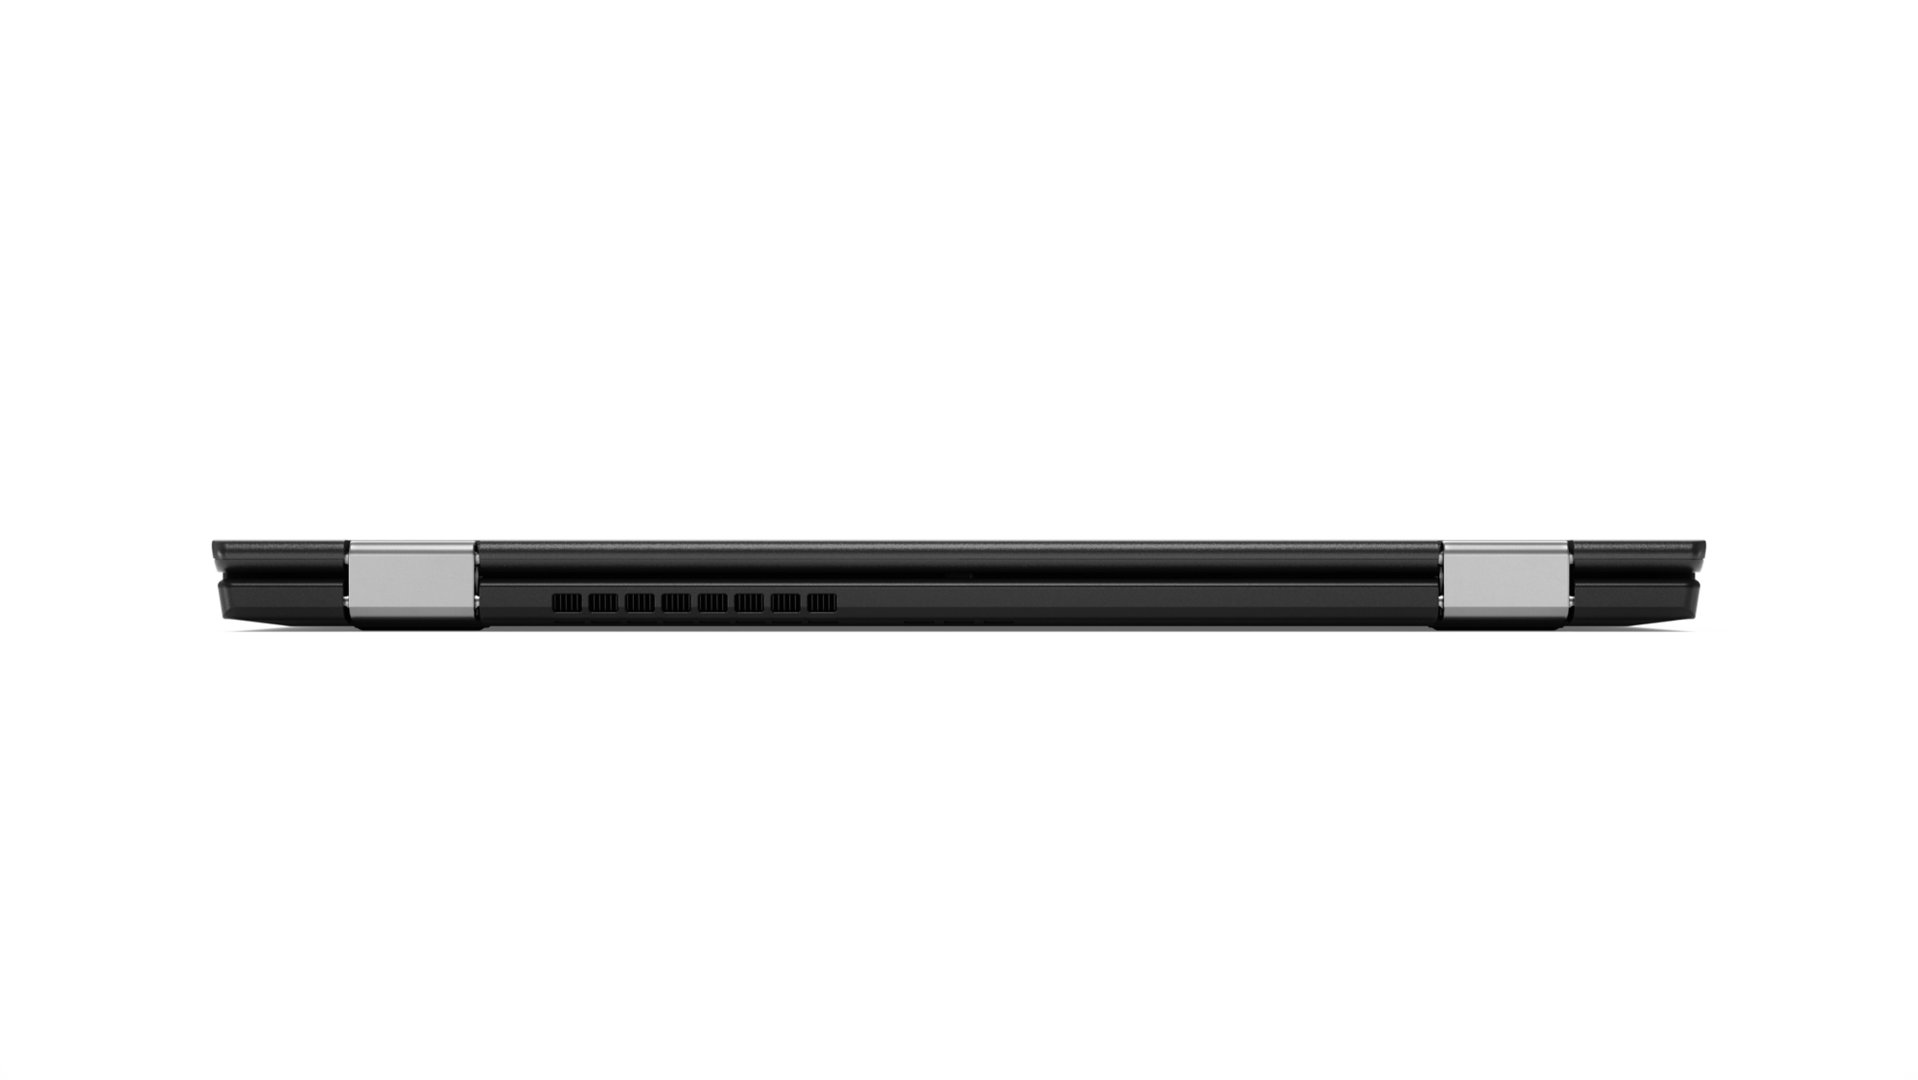 Lenovo ThinkPad L380 Yoga